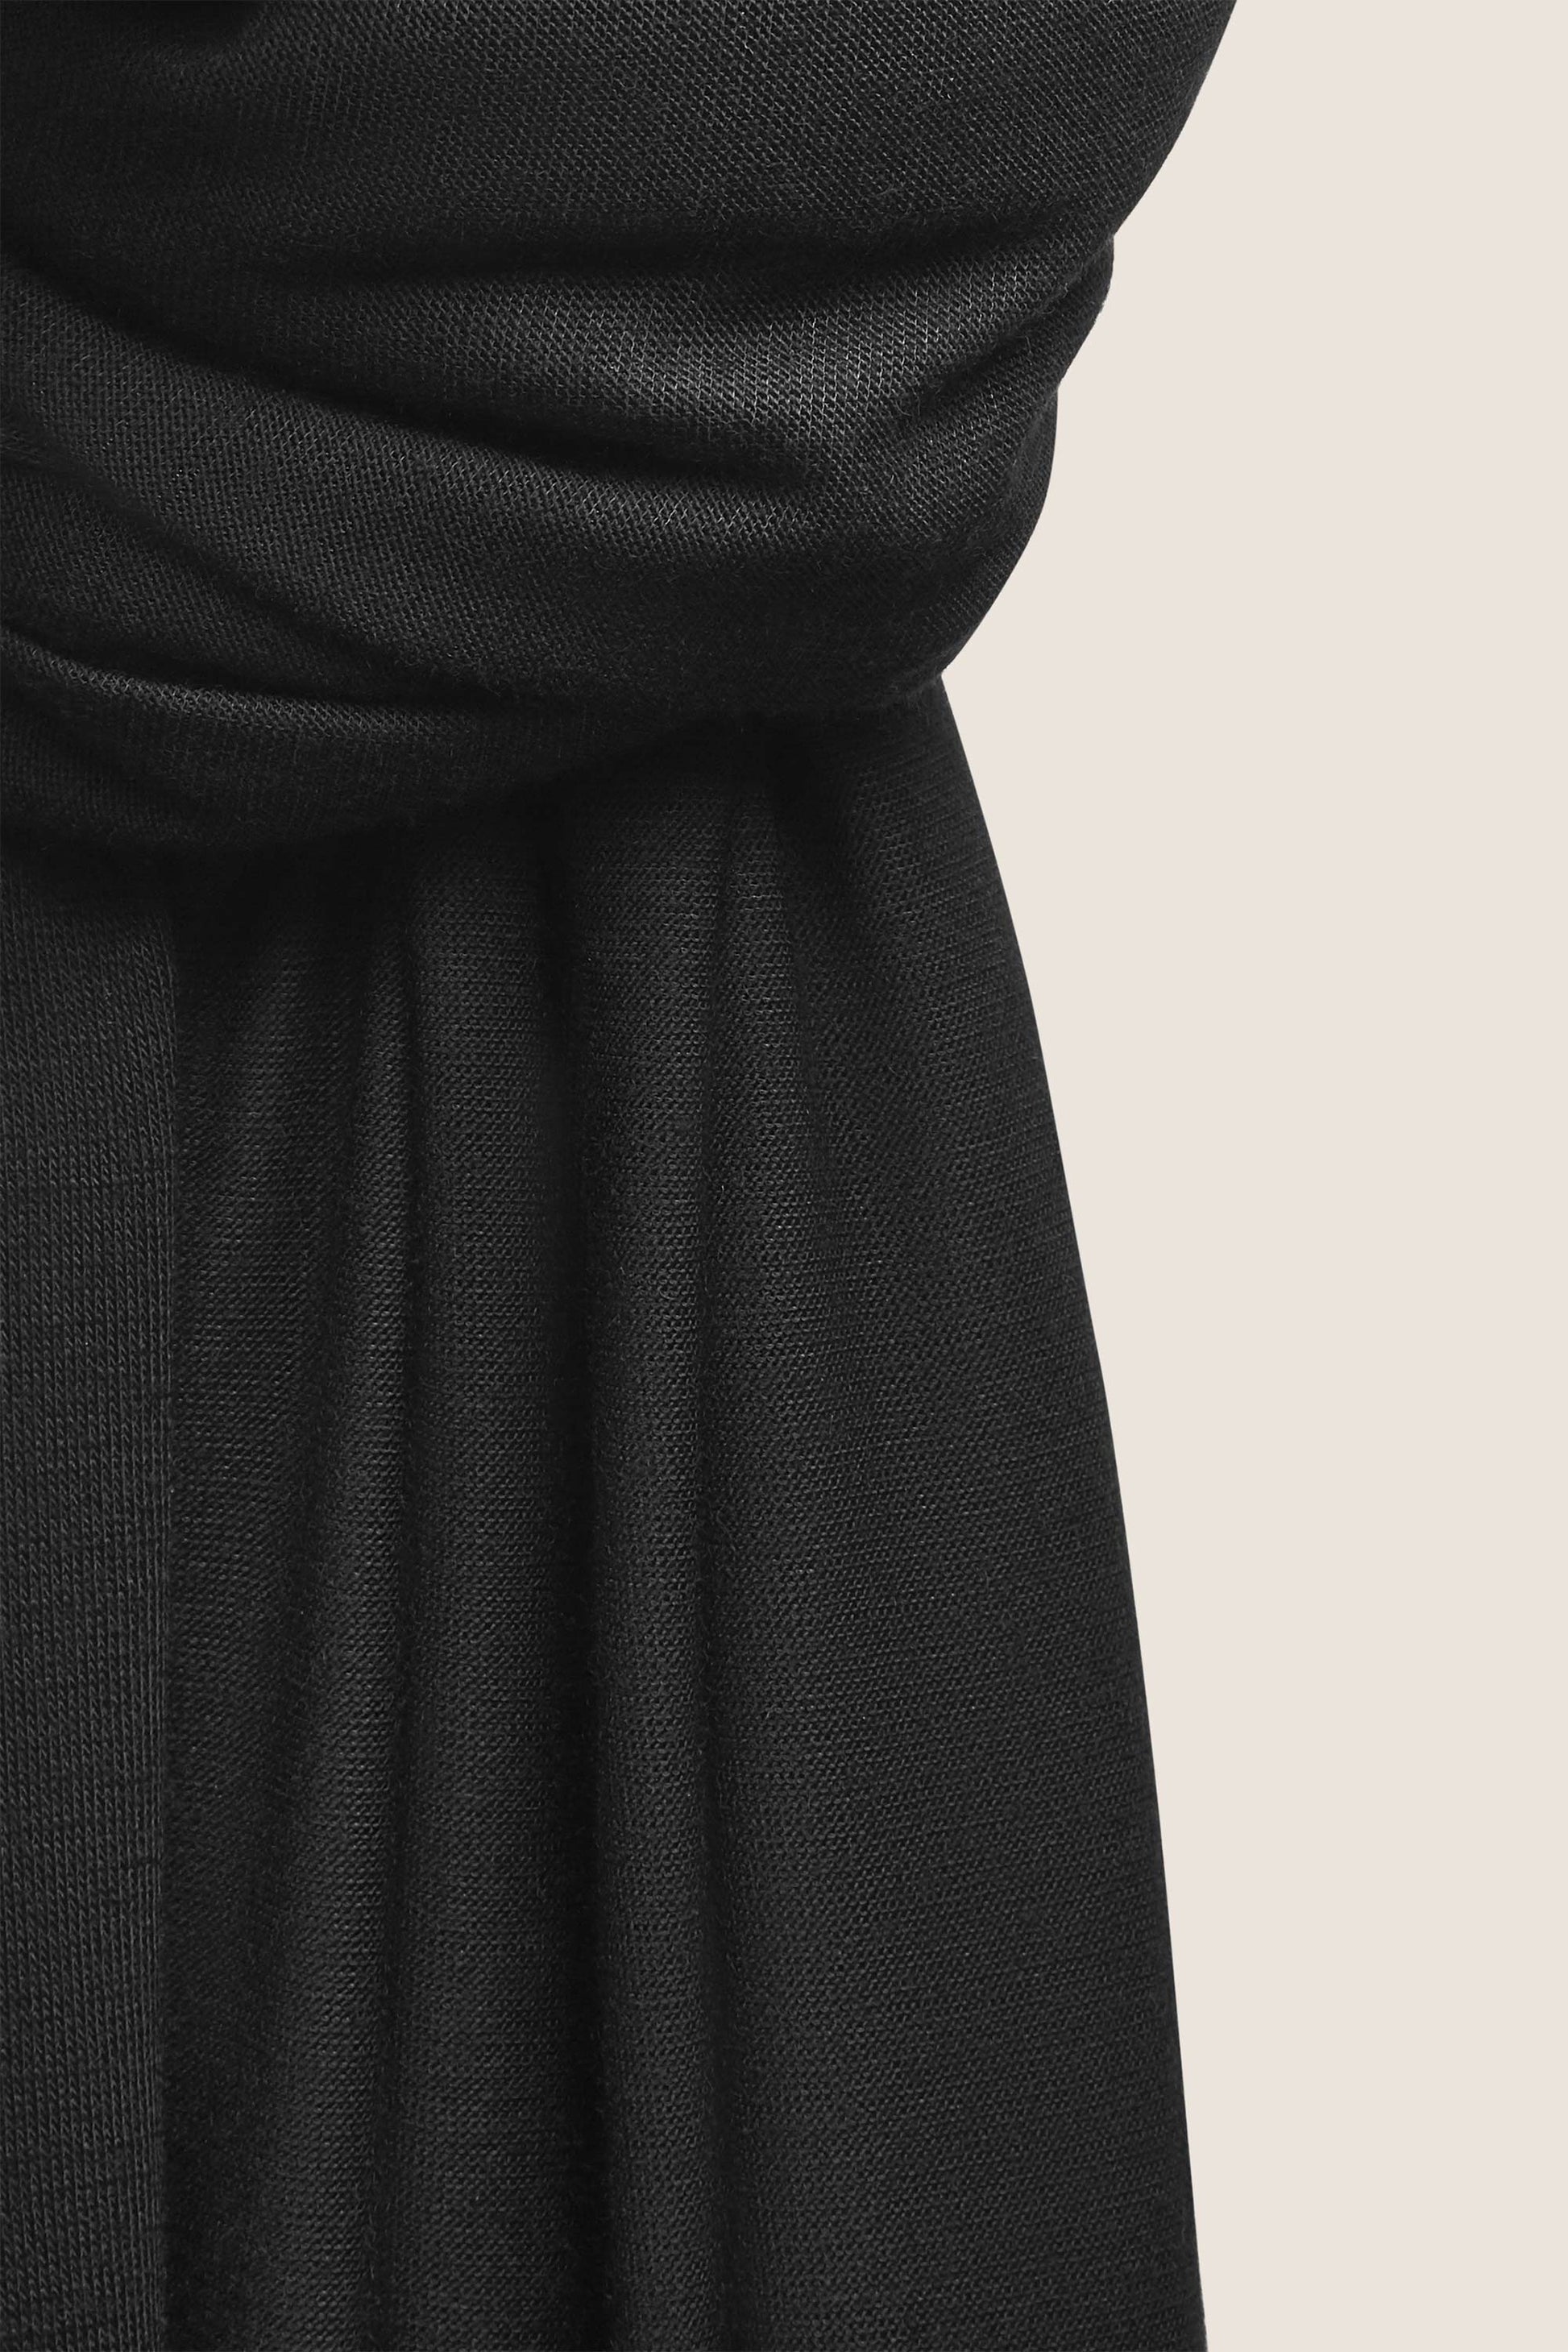 Black Premium Jersey Hijab, Premium Jersey Hijab